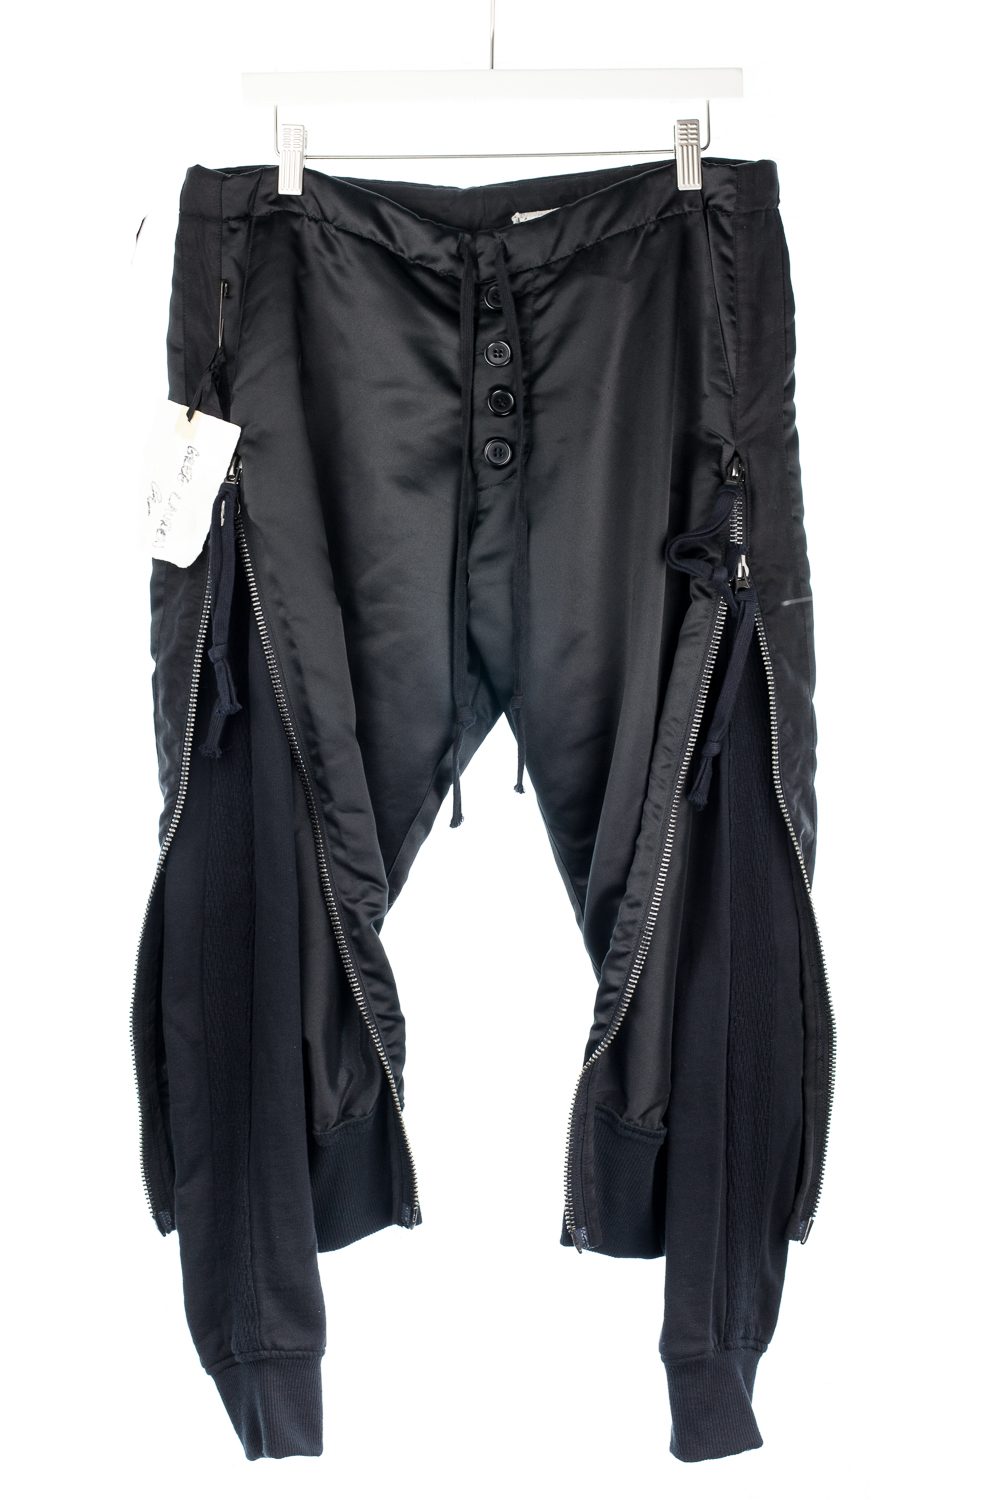 NWT SS17 “Army Jacket” Satin Fleece Zipper Lounge Pant